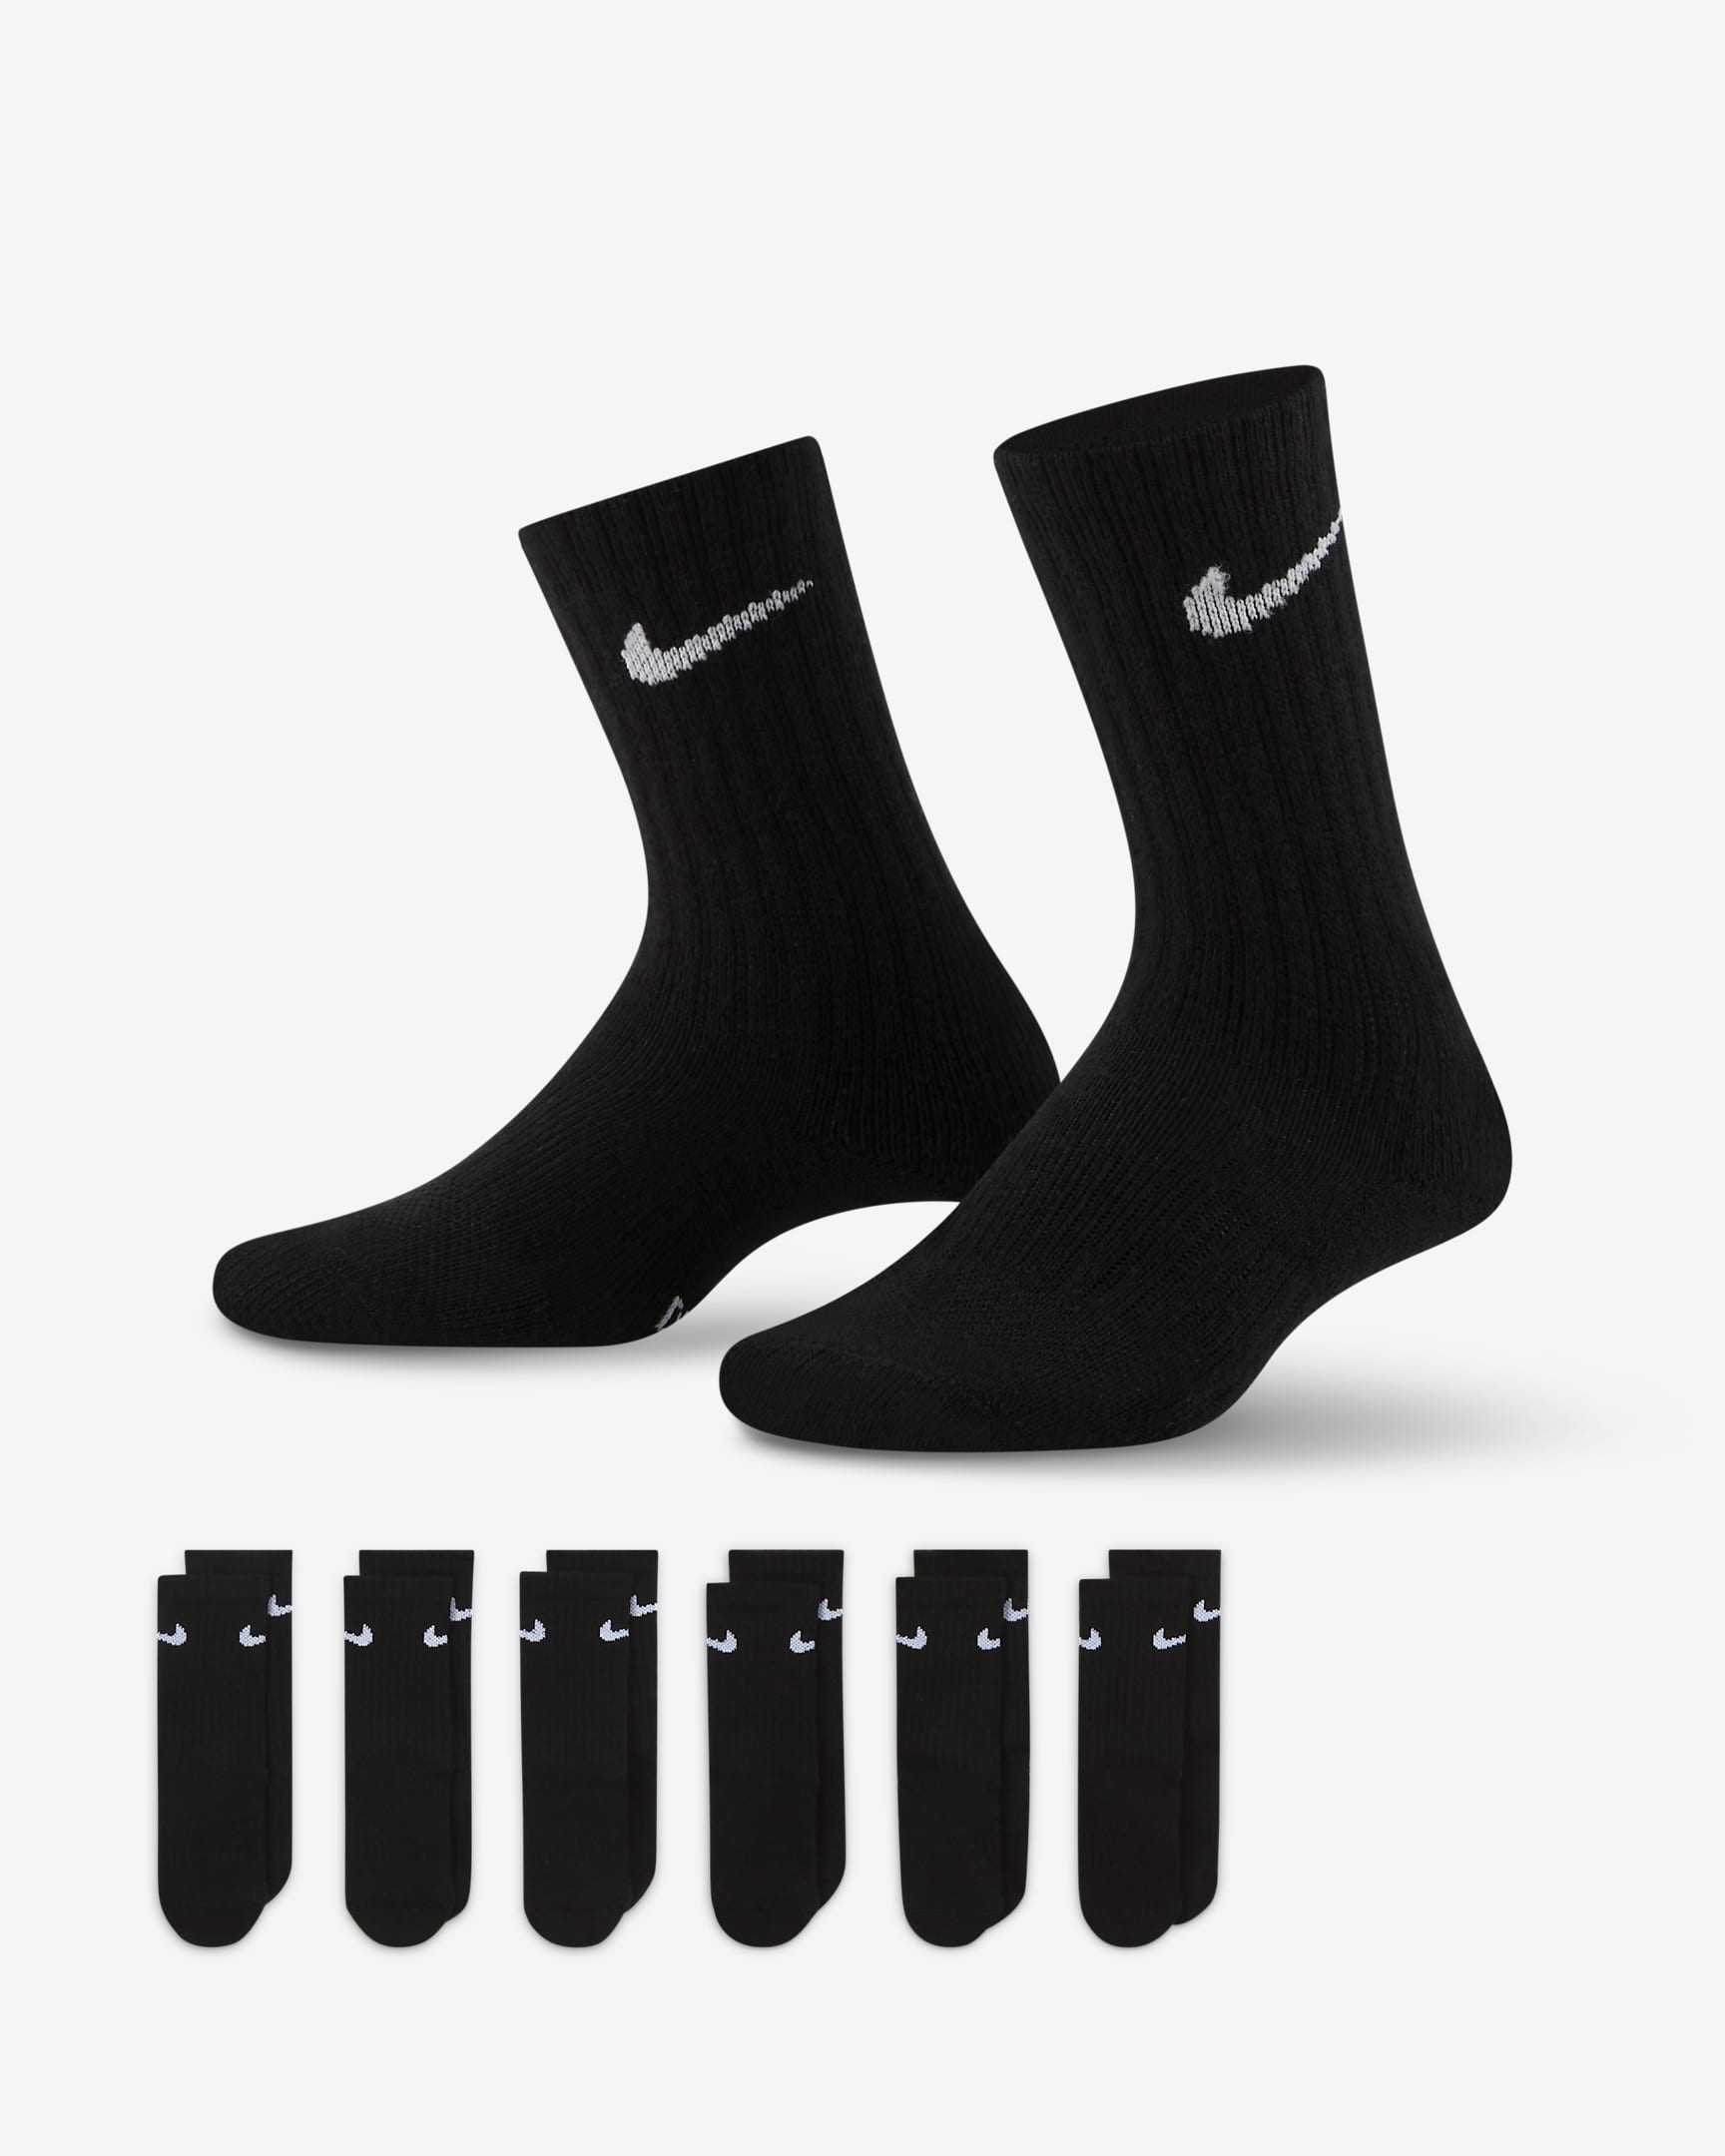 Nike Dri-FIT Performance Basics Little Kids' Crew Socks (6 Pairs) - Black